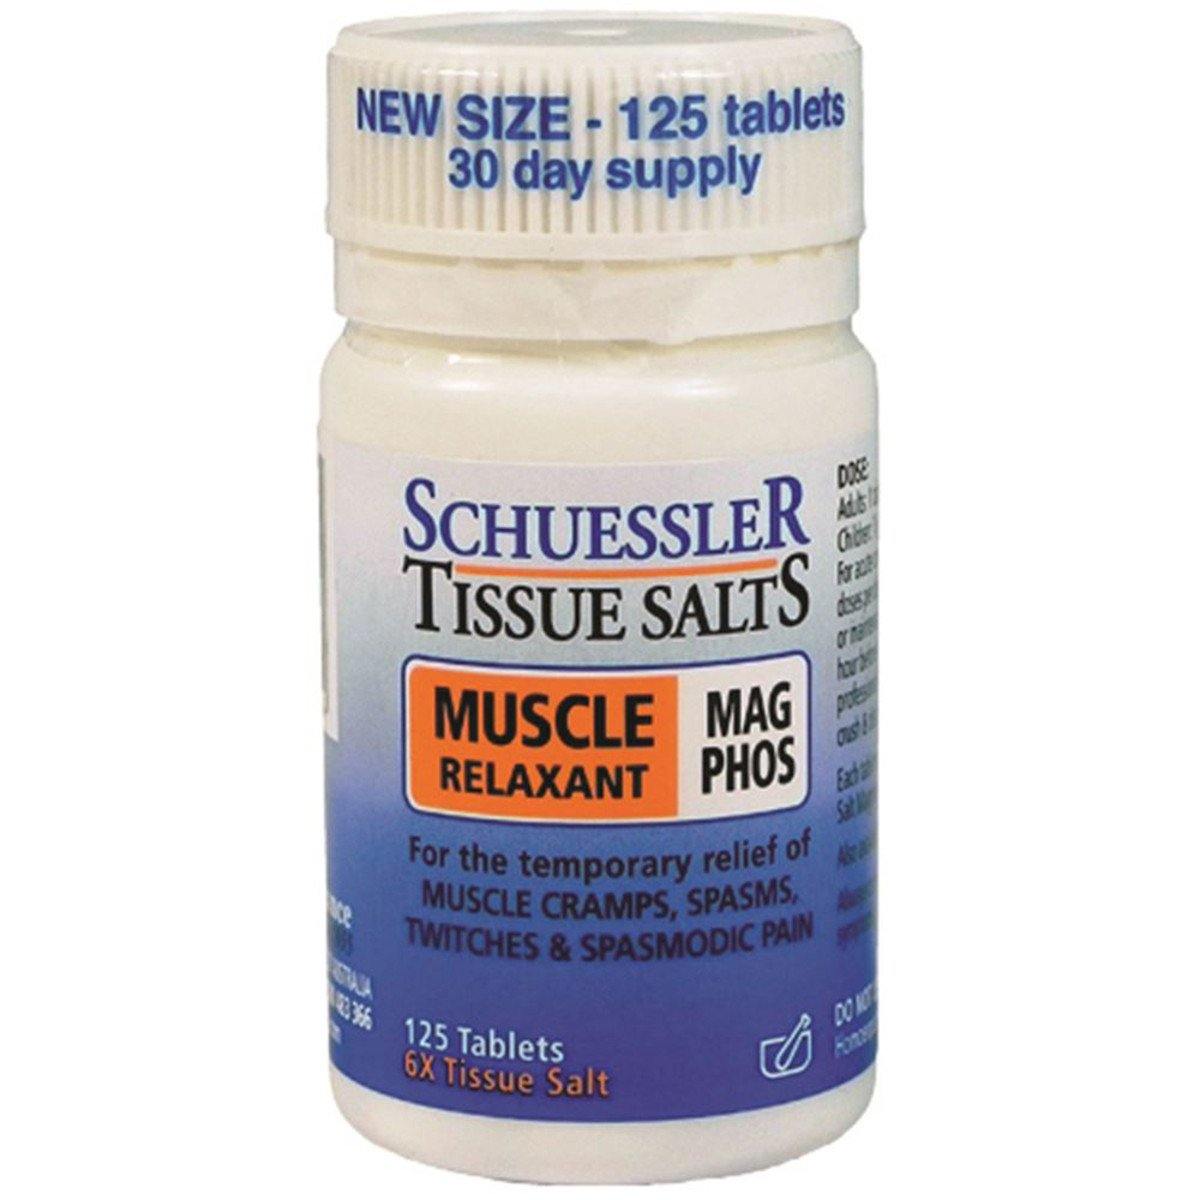 Martin & Pleasance Schuessler Tissue Salts Mag Phos (Muscle Relaxant) 125 Tablets - QVM Vitamins™